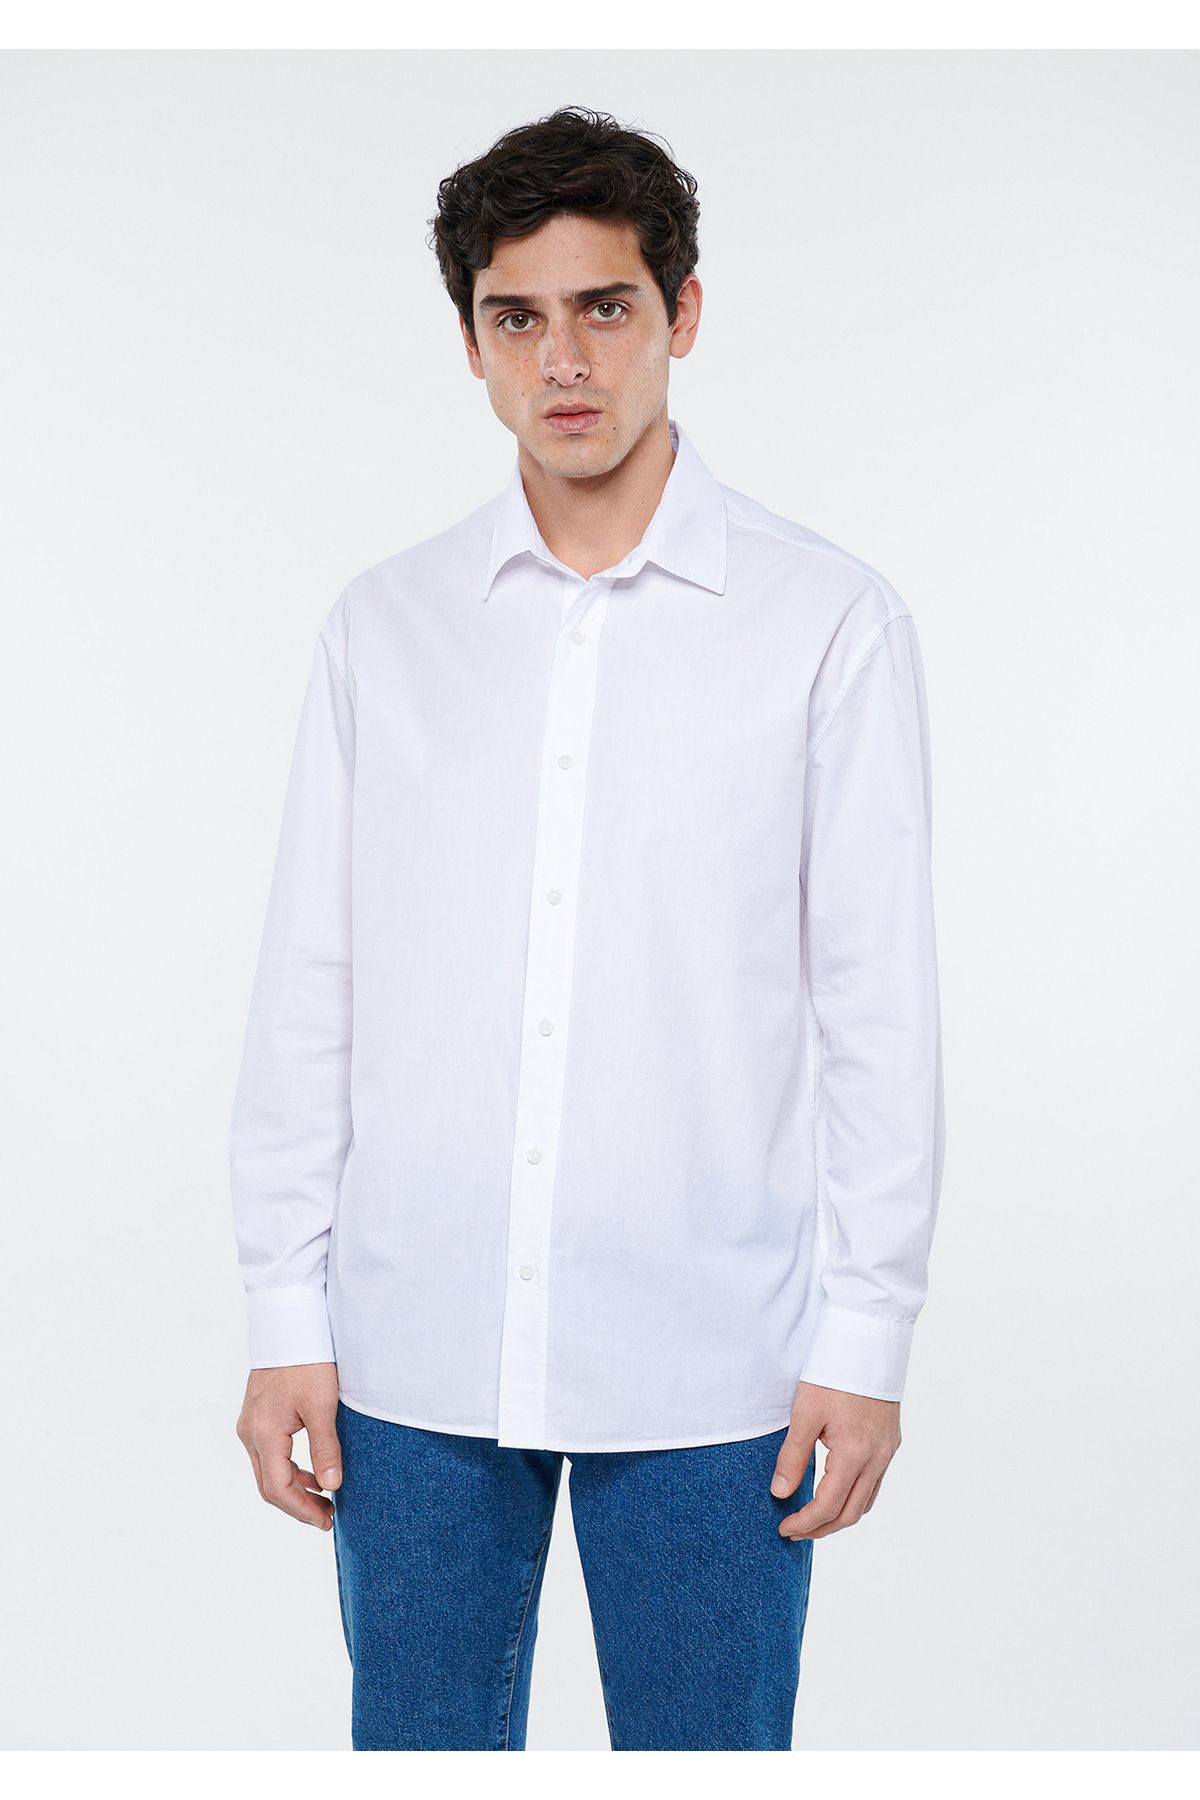 Mavi پیراهن سفید تناسب / برش راحت 0210603-620